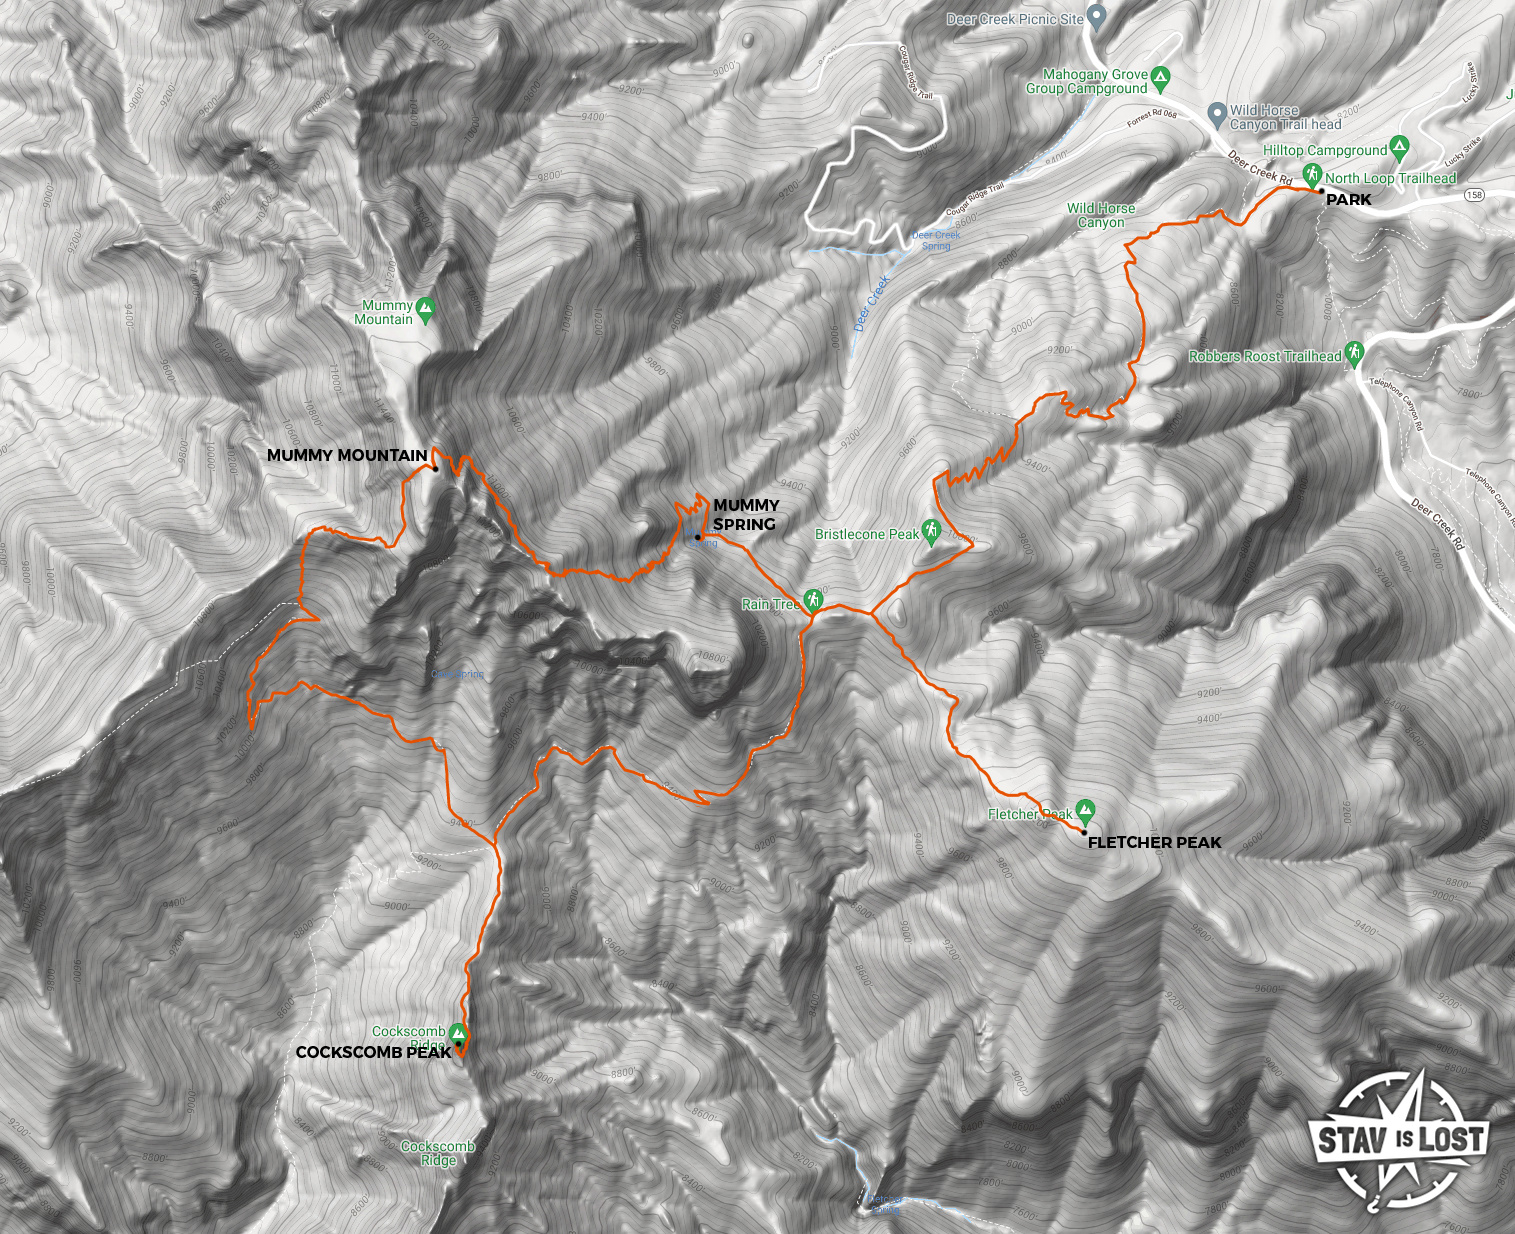 map for Mummy Mountain, Cockscomb Peak, Fletcher Peak by stav is lost